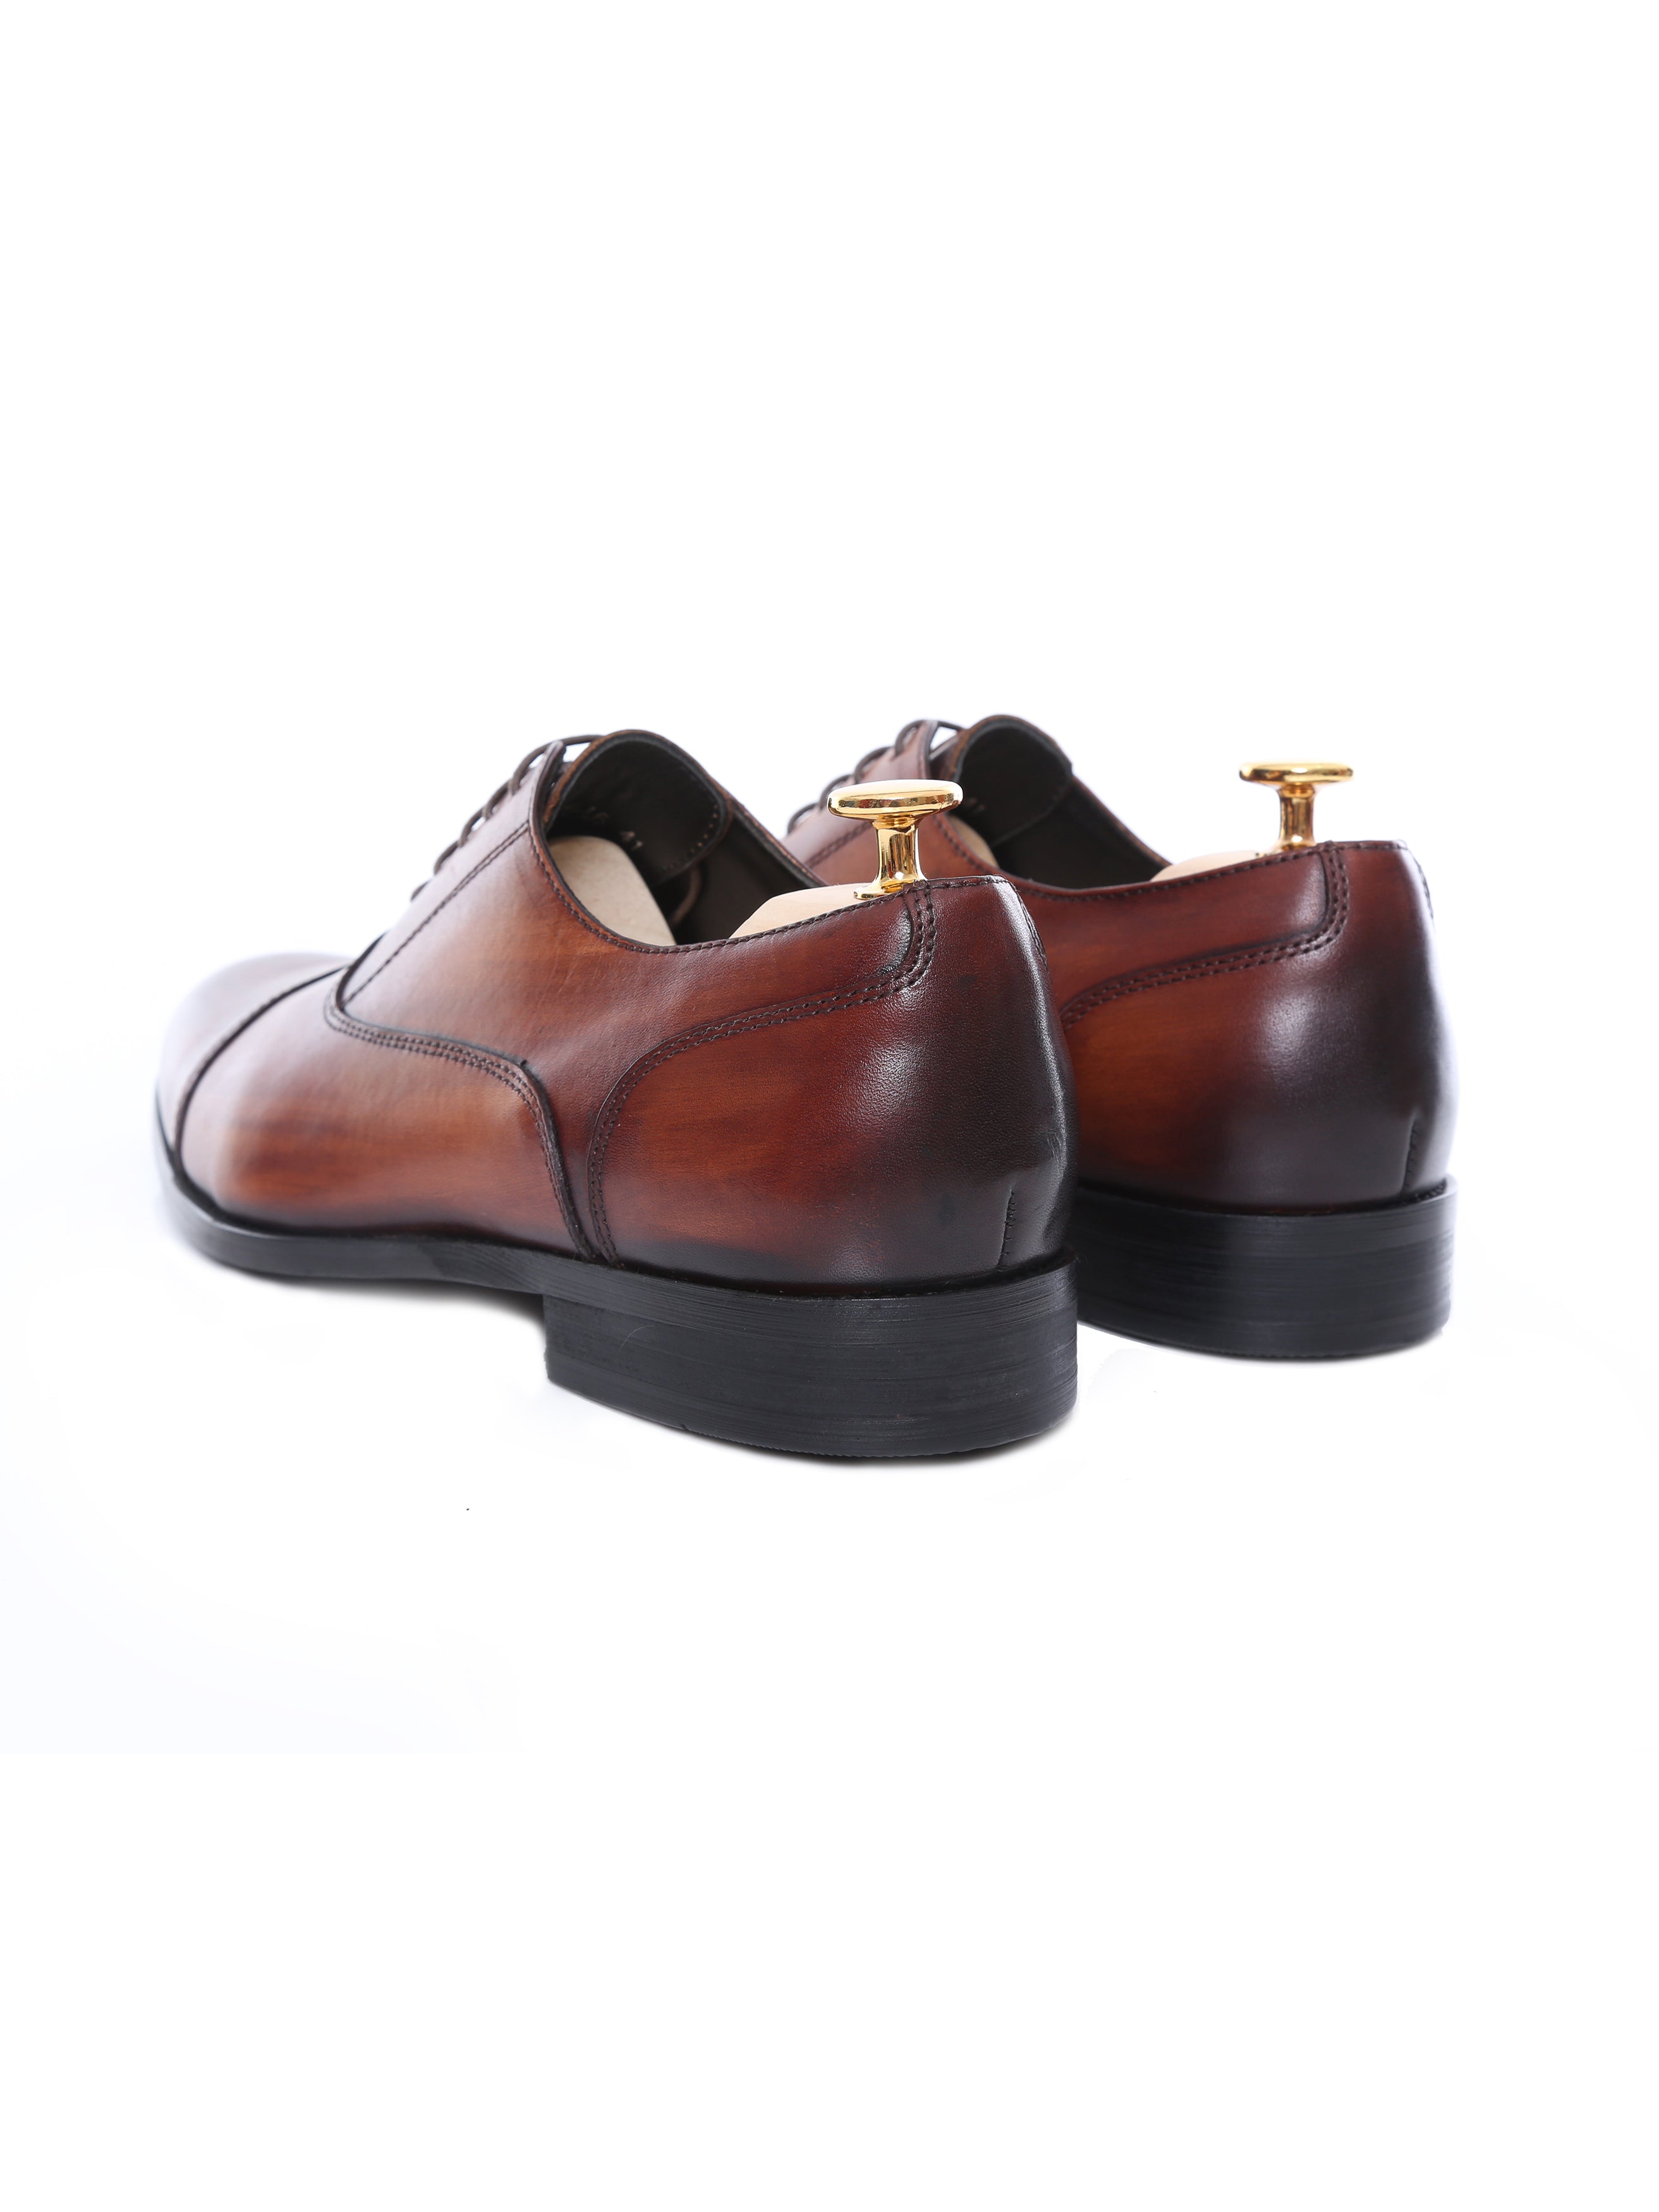 Oxford Cap Toe - Cognac Tan Lace Up (Hand Painted Patina) - Zeve Shoes